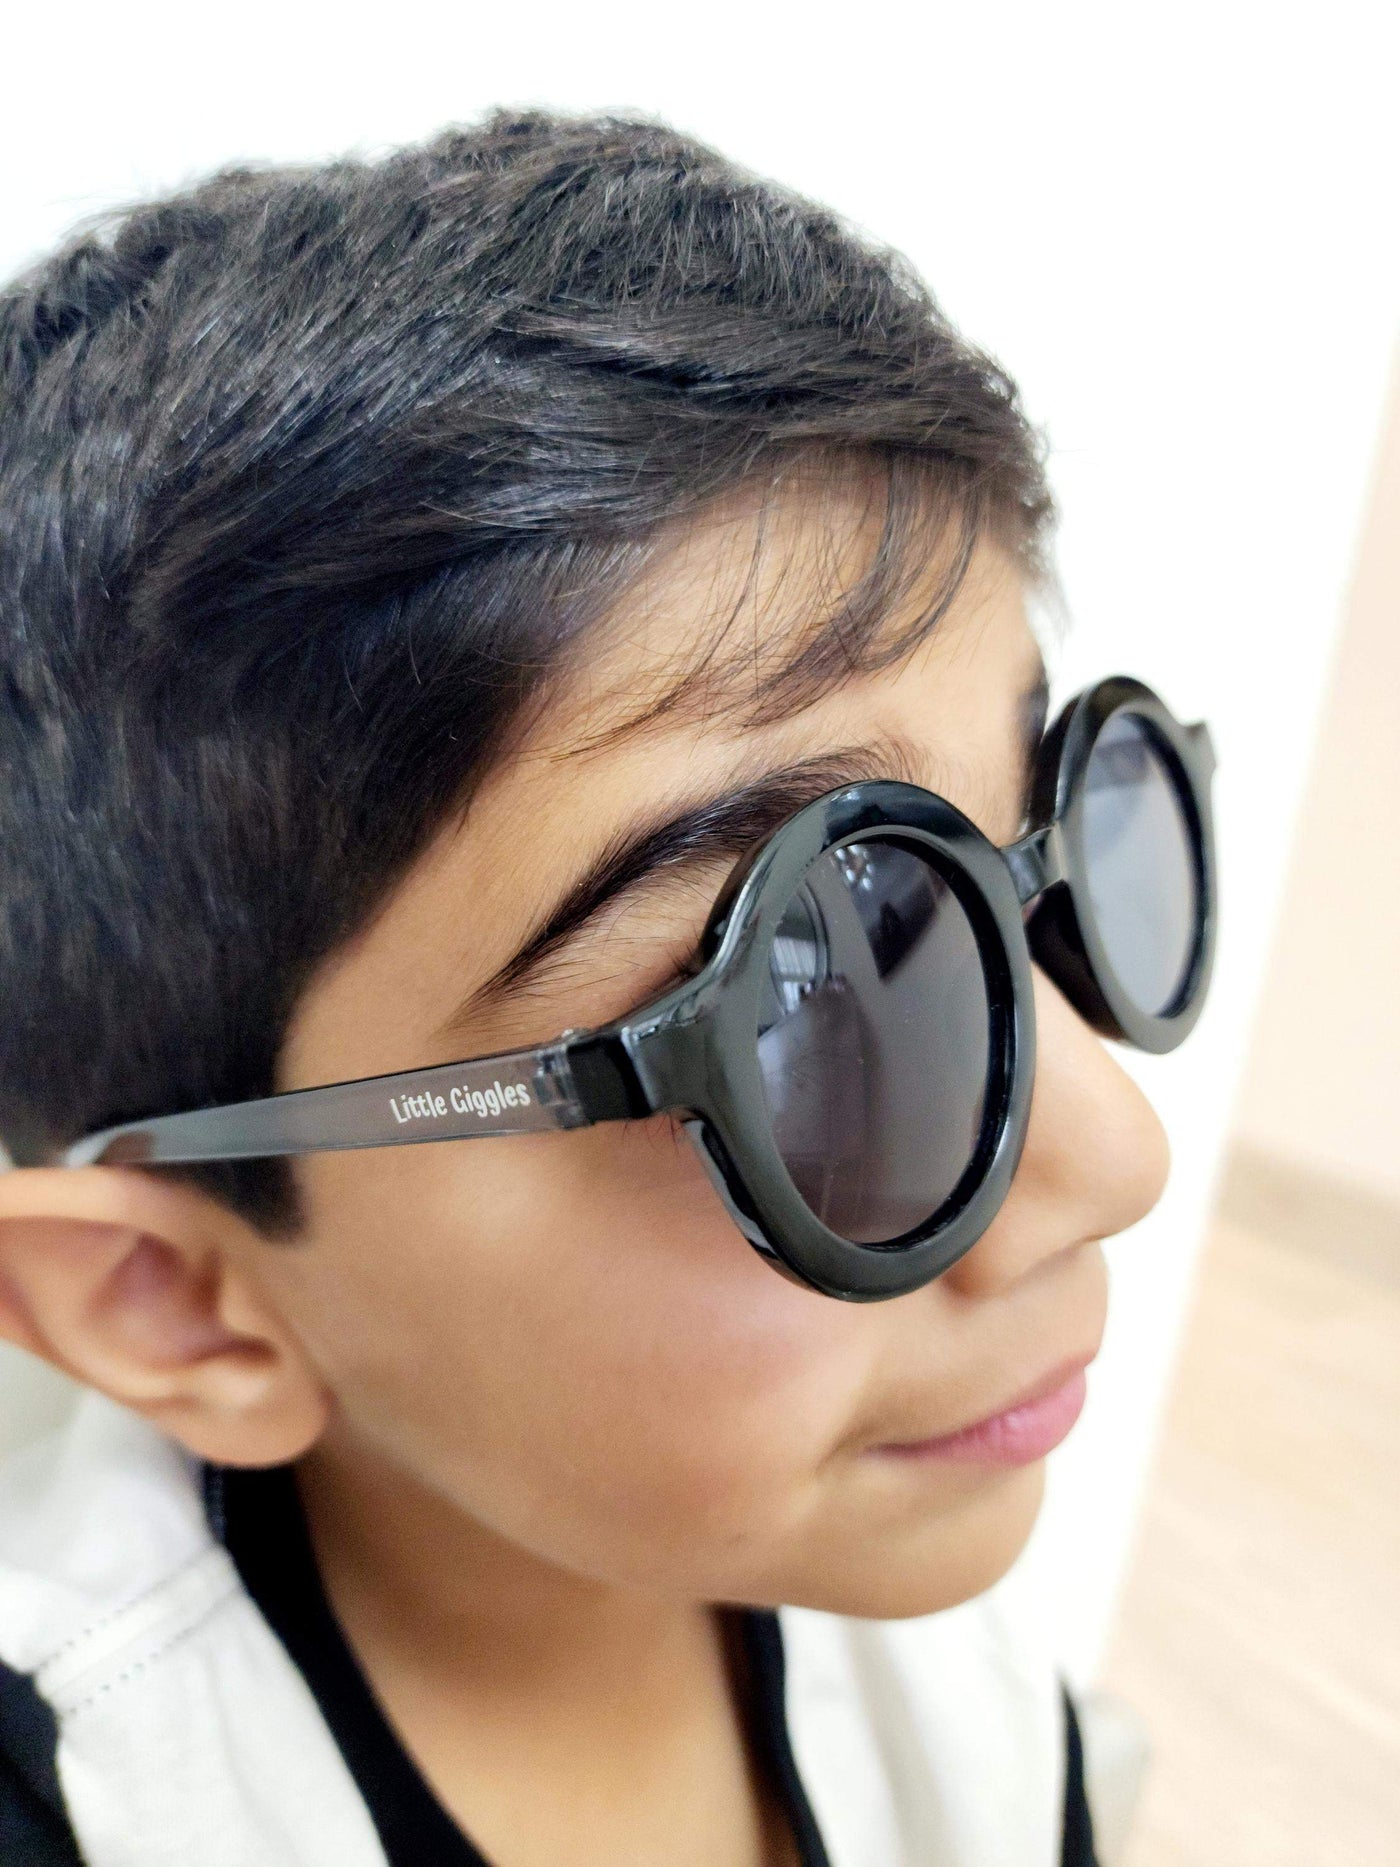 Kid Wearing Black Sunglasses